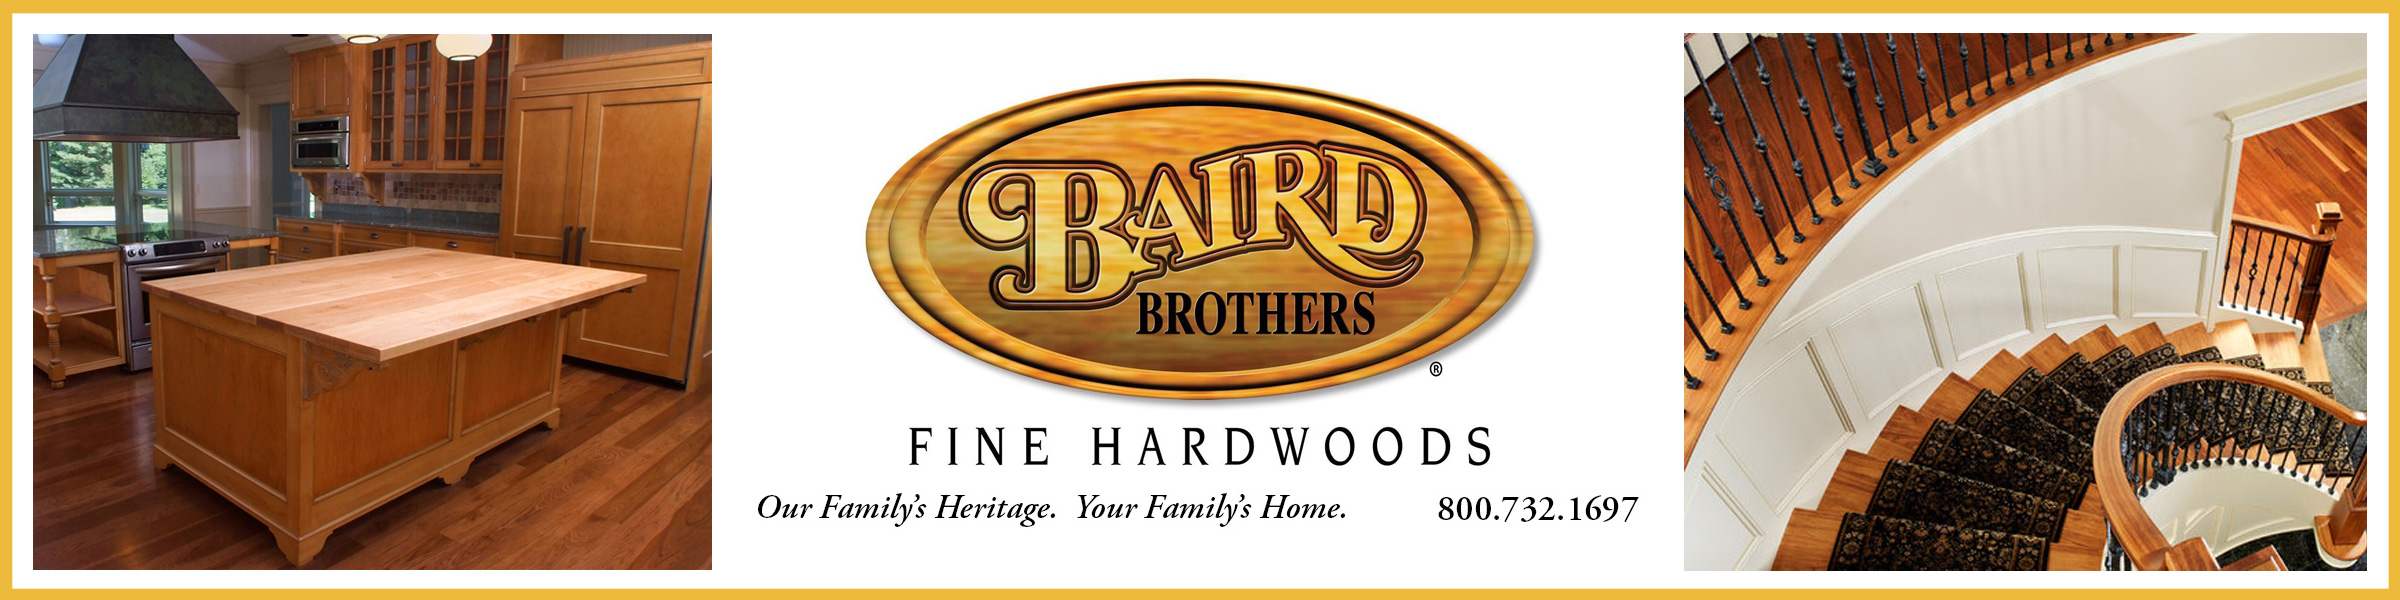 Baird Brothers